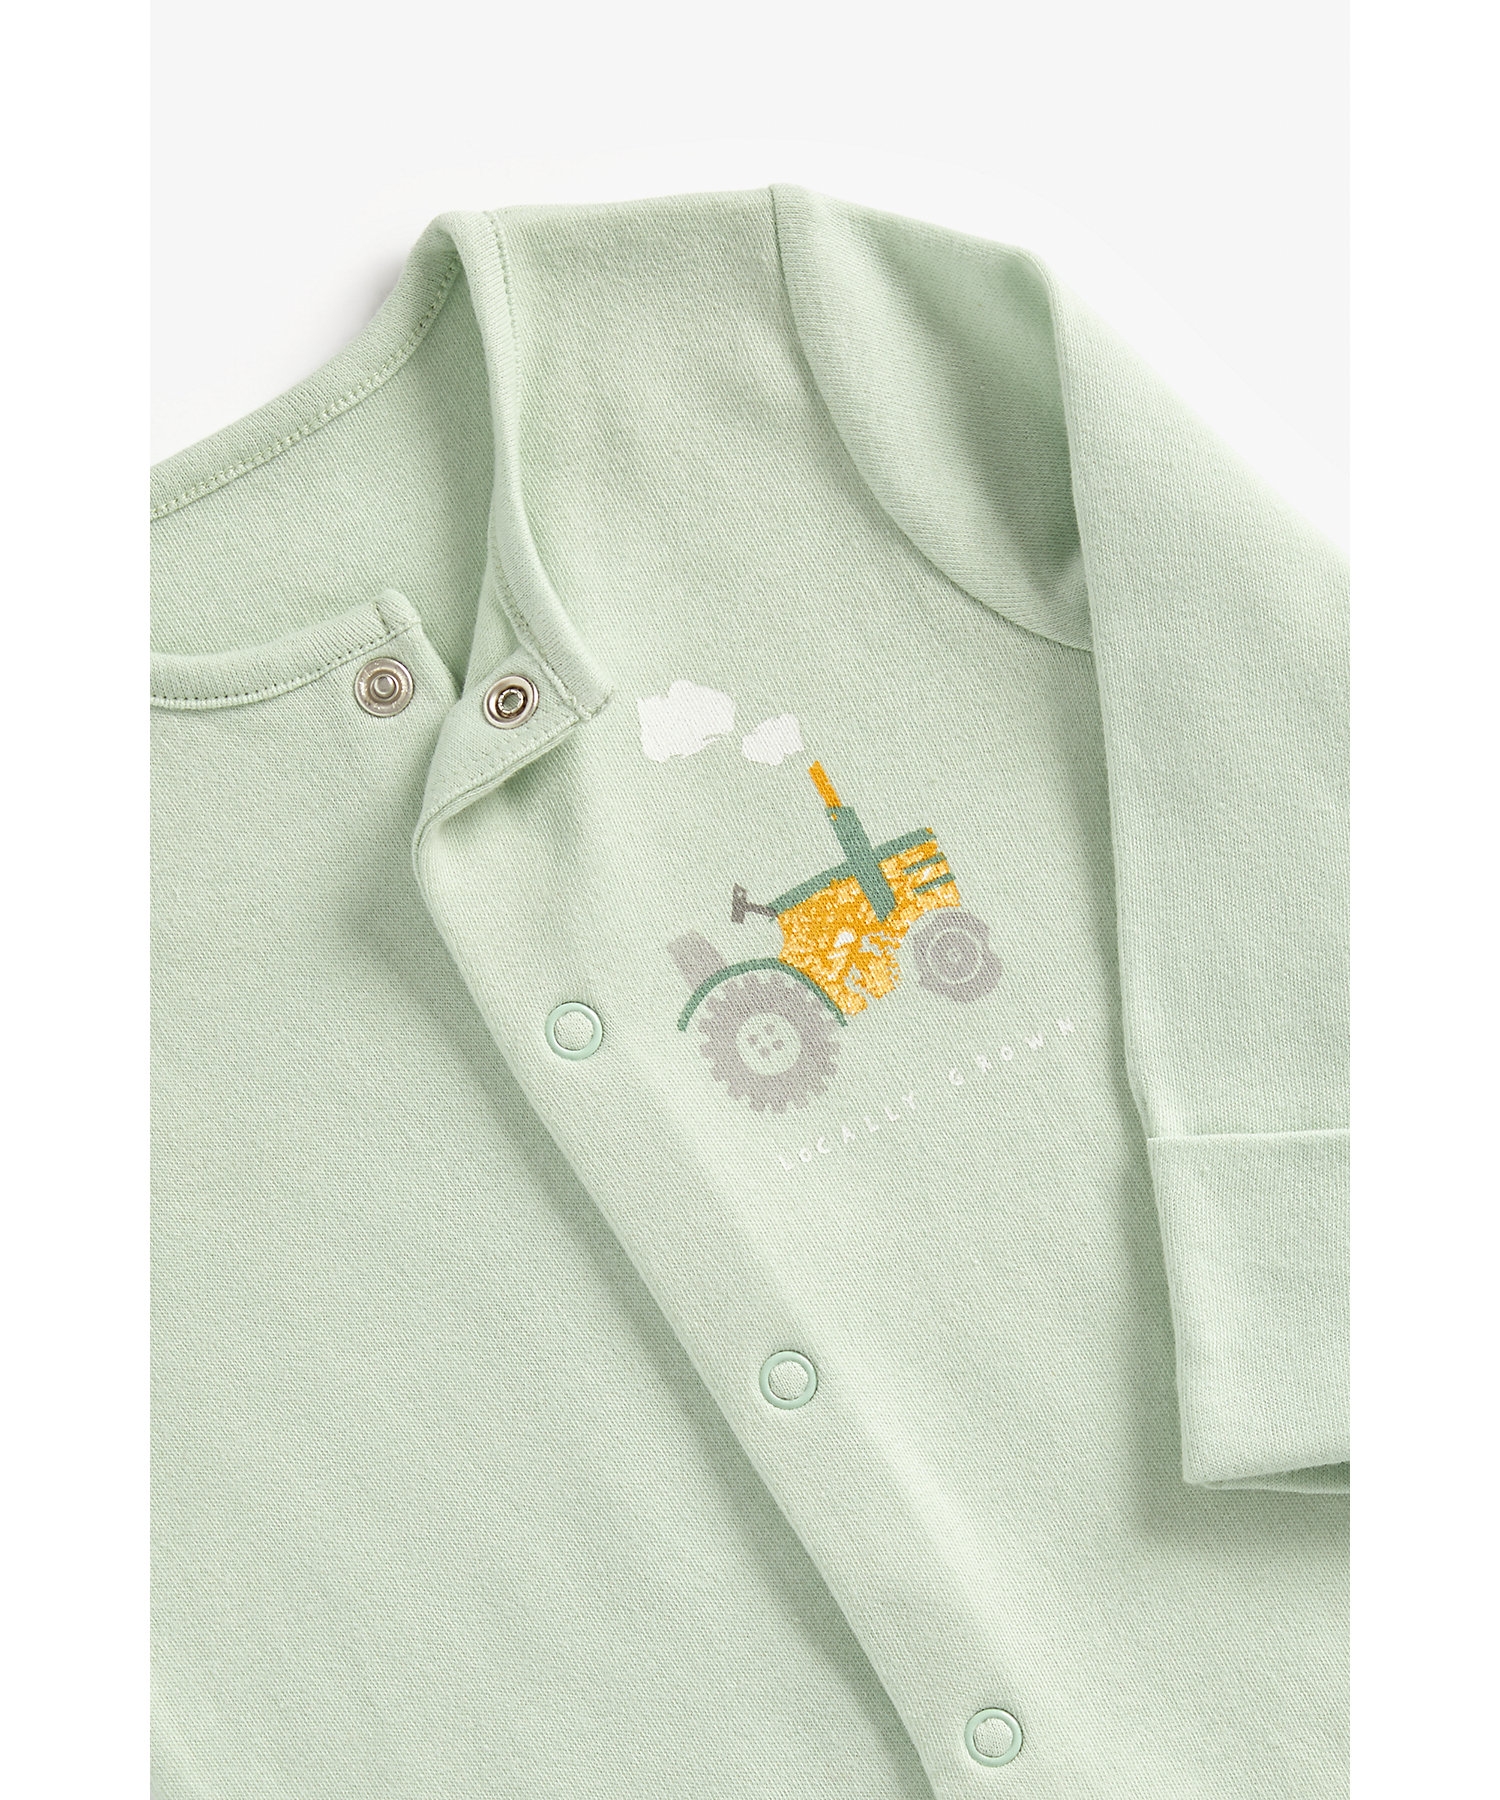 Boys Full Sleeves Sleepsuit Tractor Print - Pack Of 3 - Multicolor